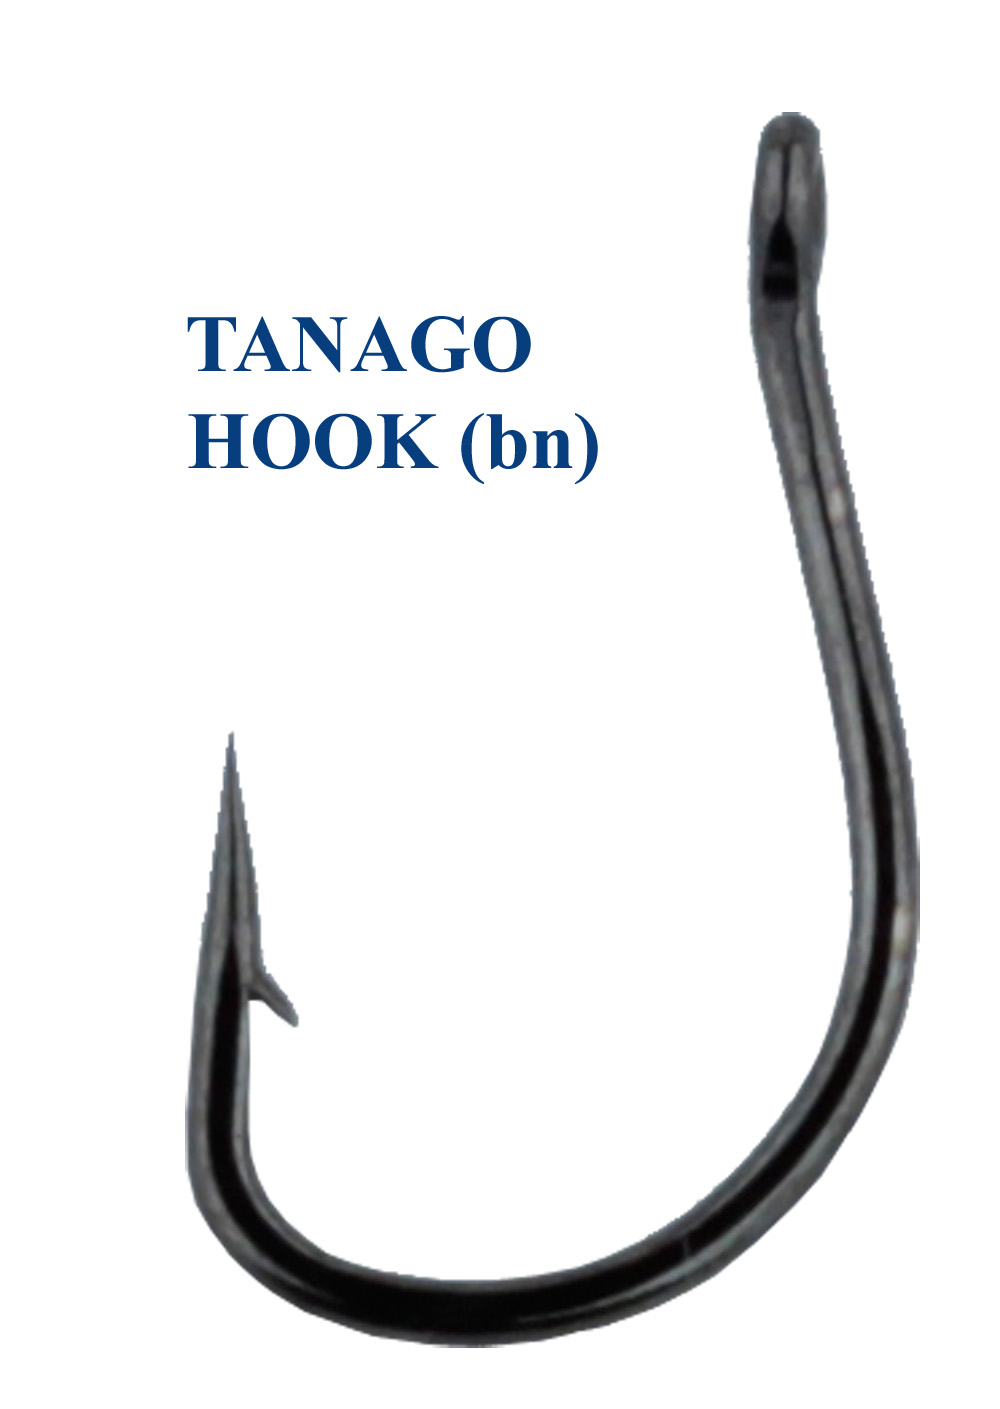 TANAGO HOOK